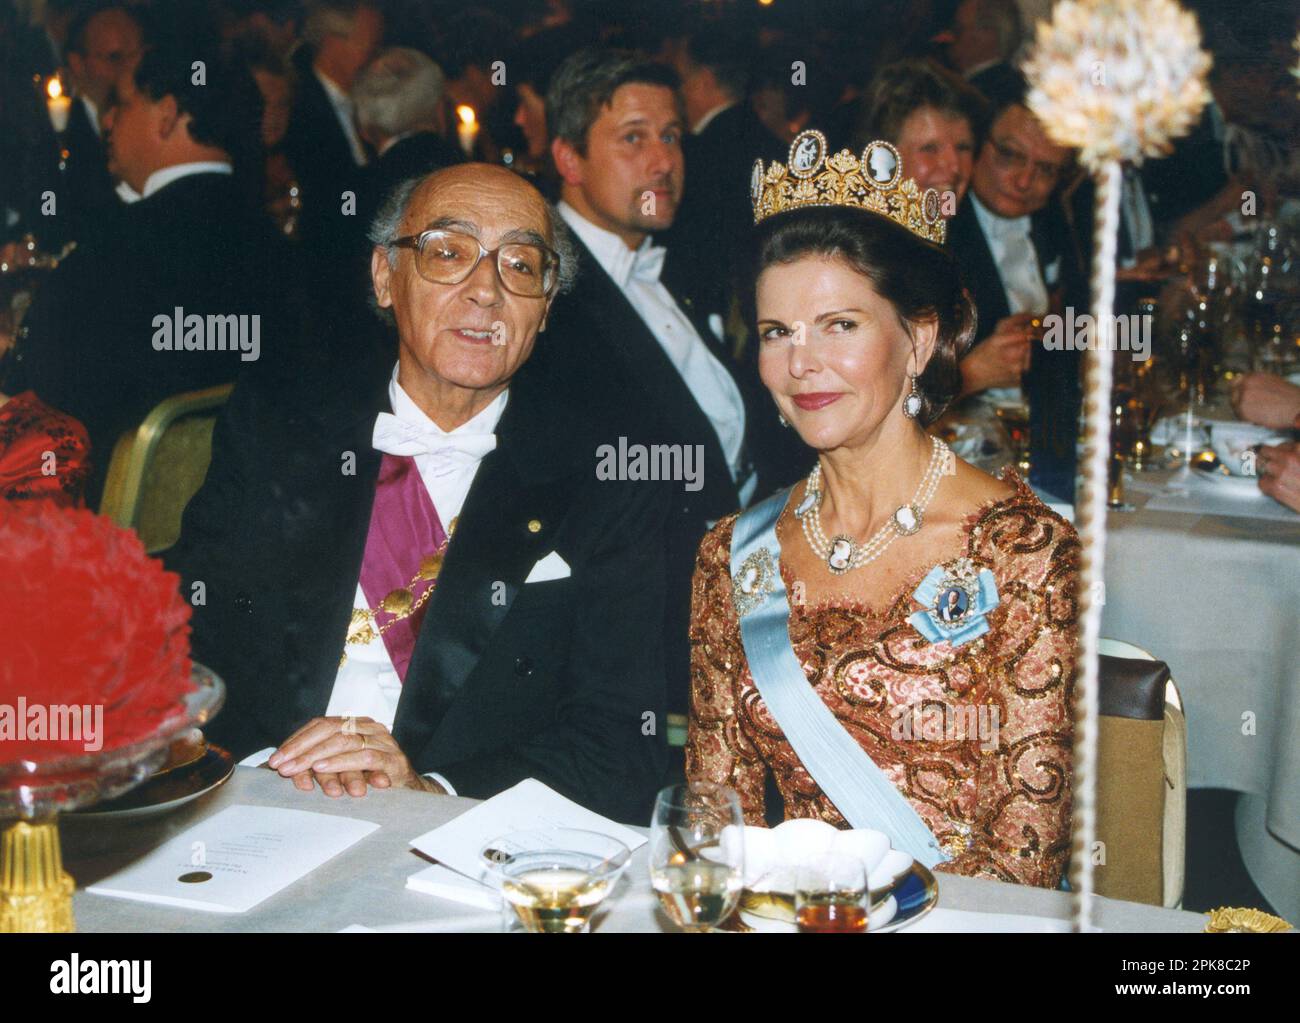 Sweden Queen Silvia at The Nobel banquet where Jose Saramango litterature prize winner as table companion Stock Photo